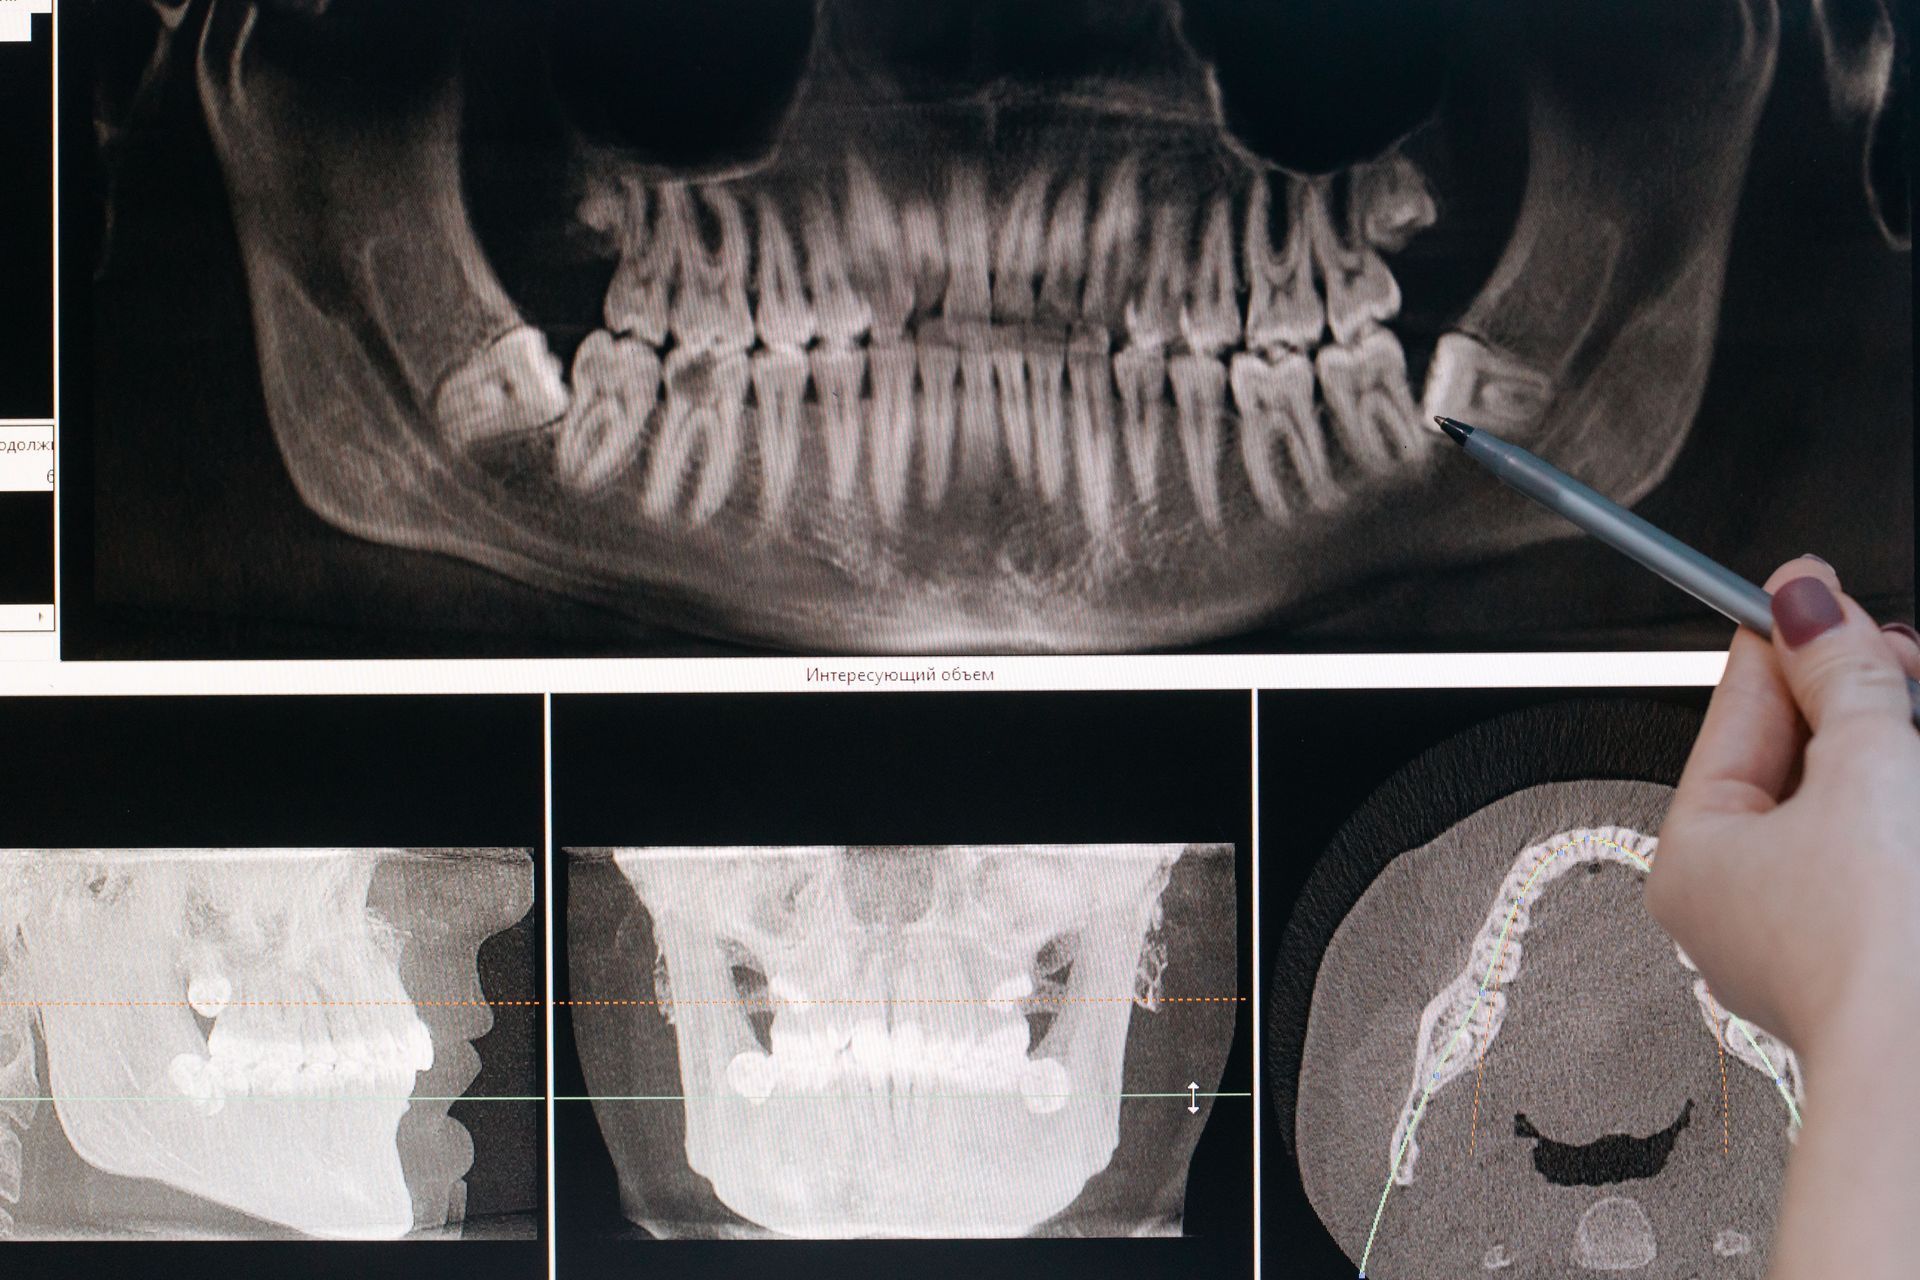 Dentist examines dental X-rays preparing for dental implant procedure